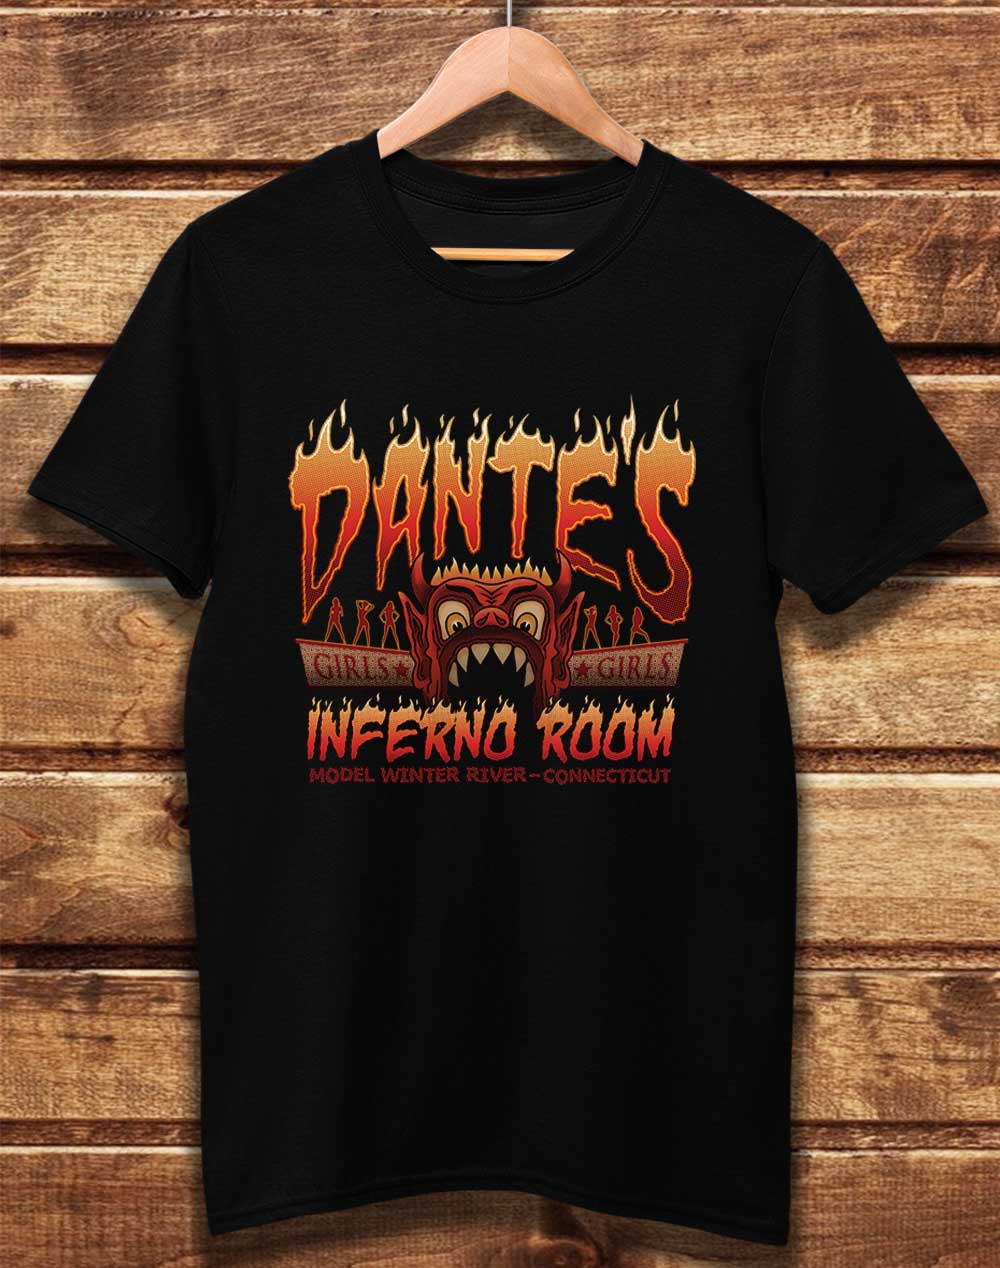 Black - Dante's Inferno Room Organic Cotton T-Shirt